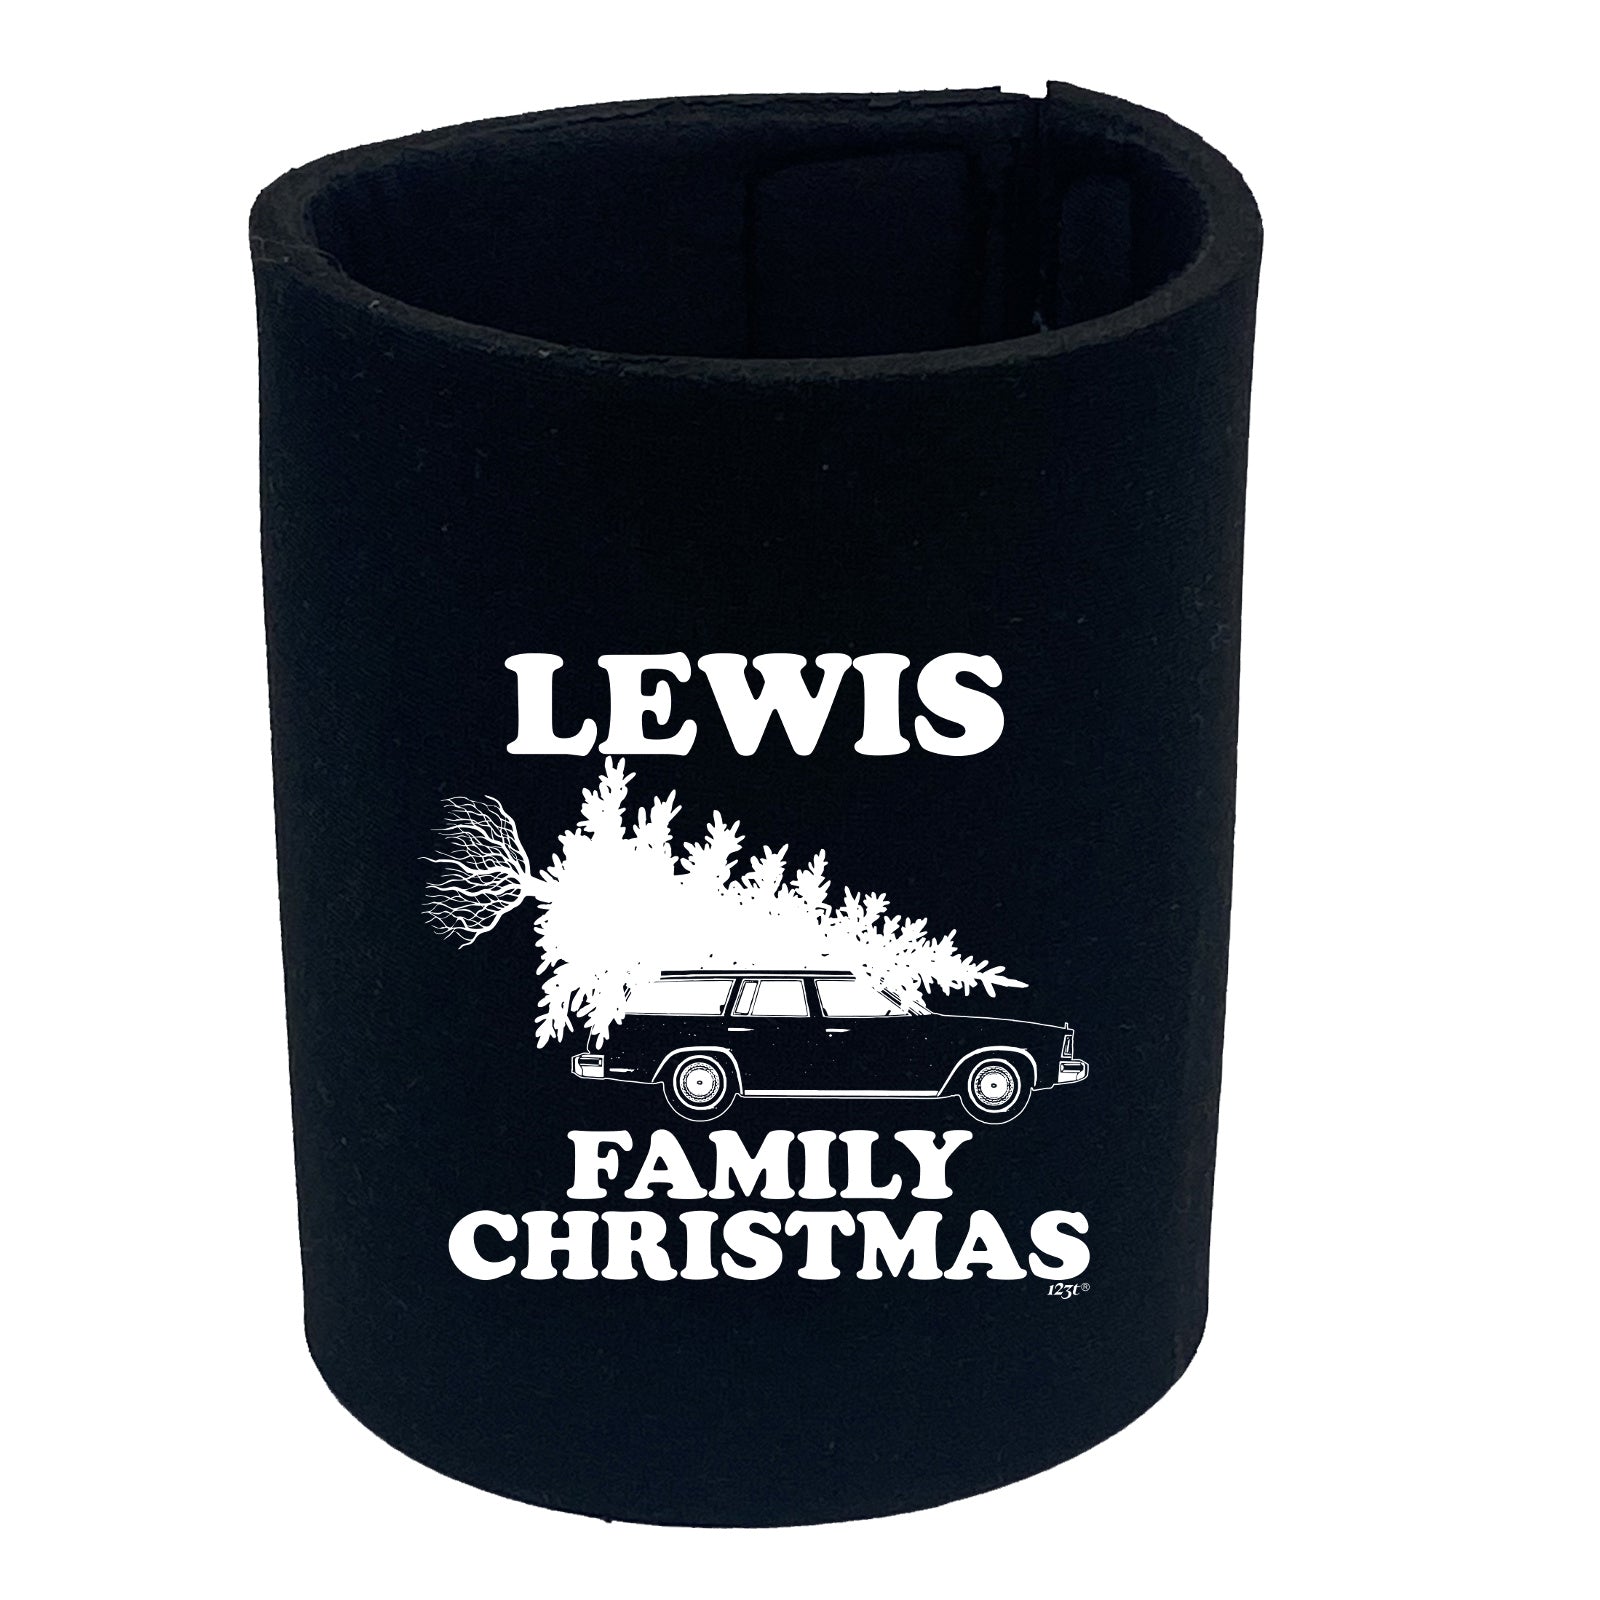 Family Christmas Lewis - Funny Stubby Holder